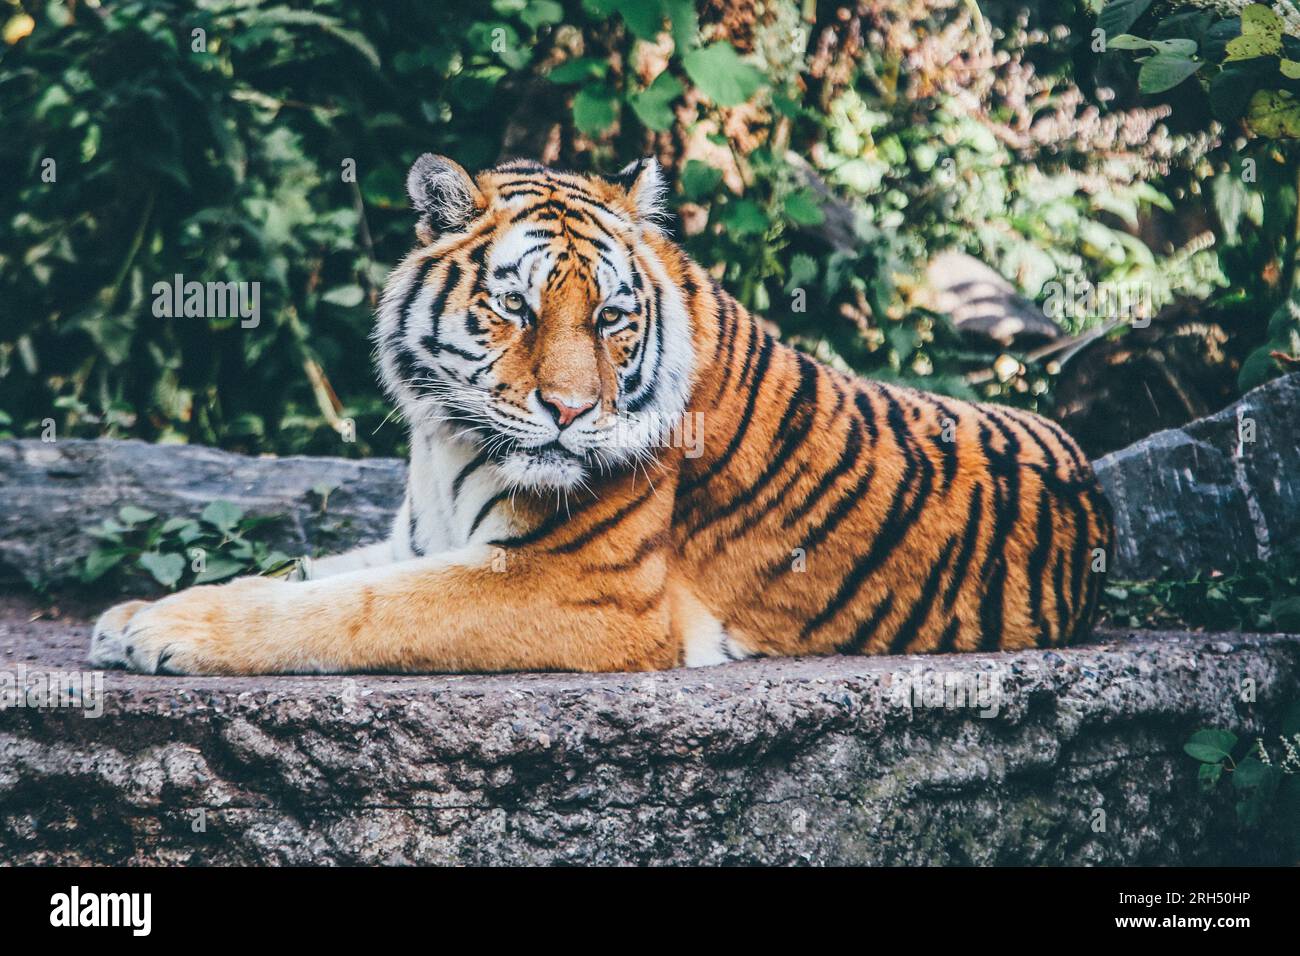 Meet The National Animal of Bangladesh, The Royal Bengal Tiger